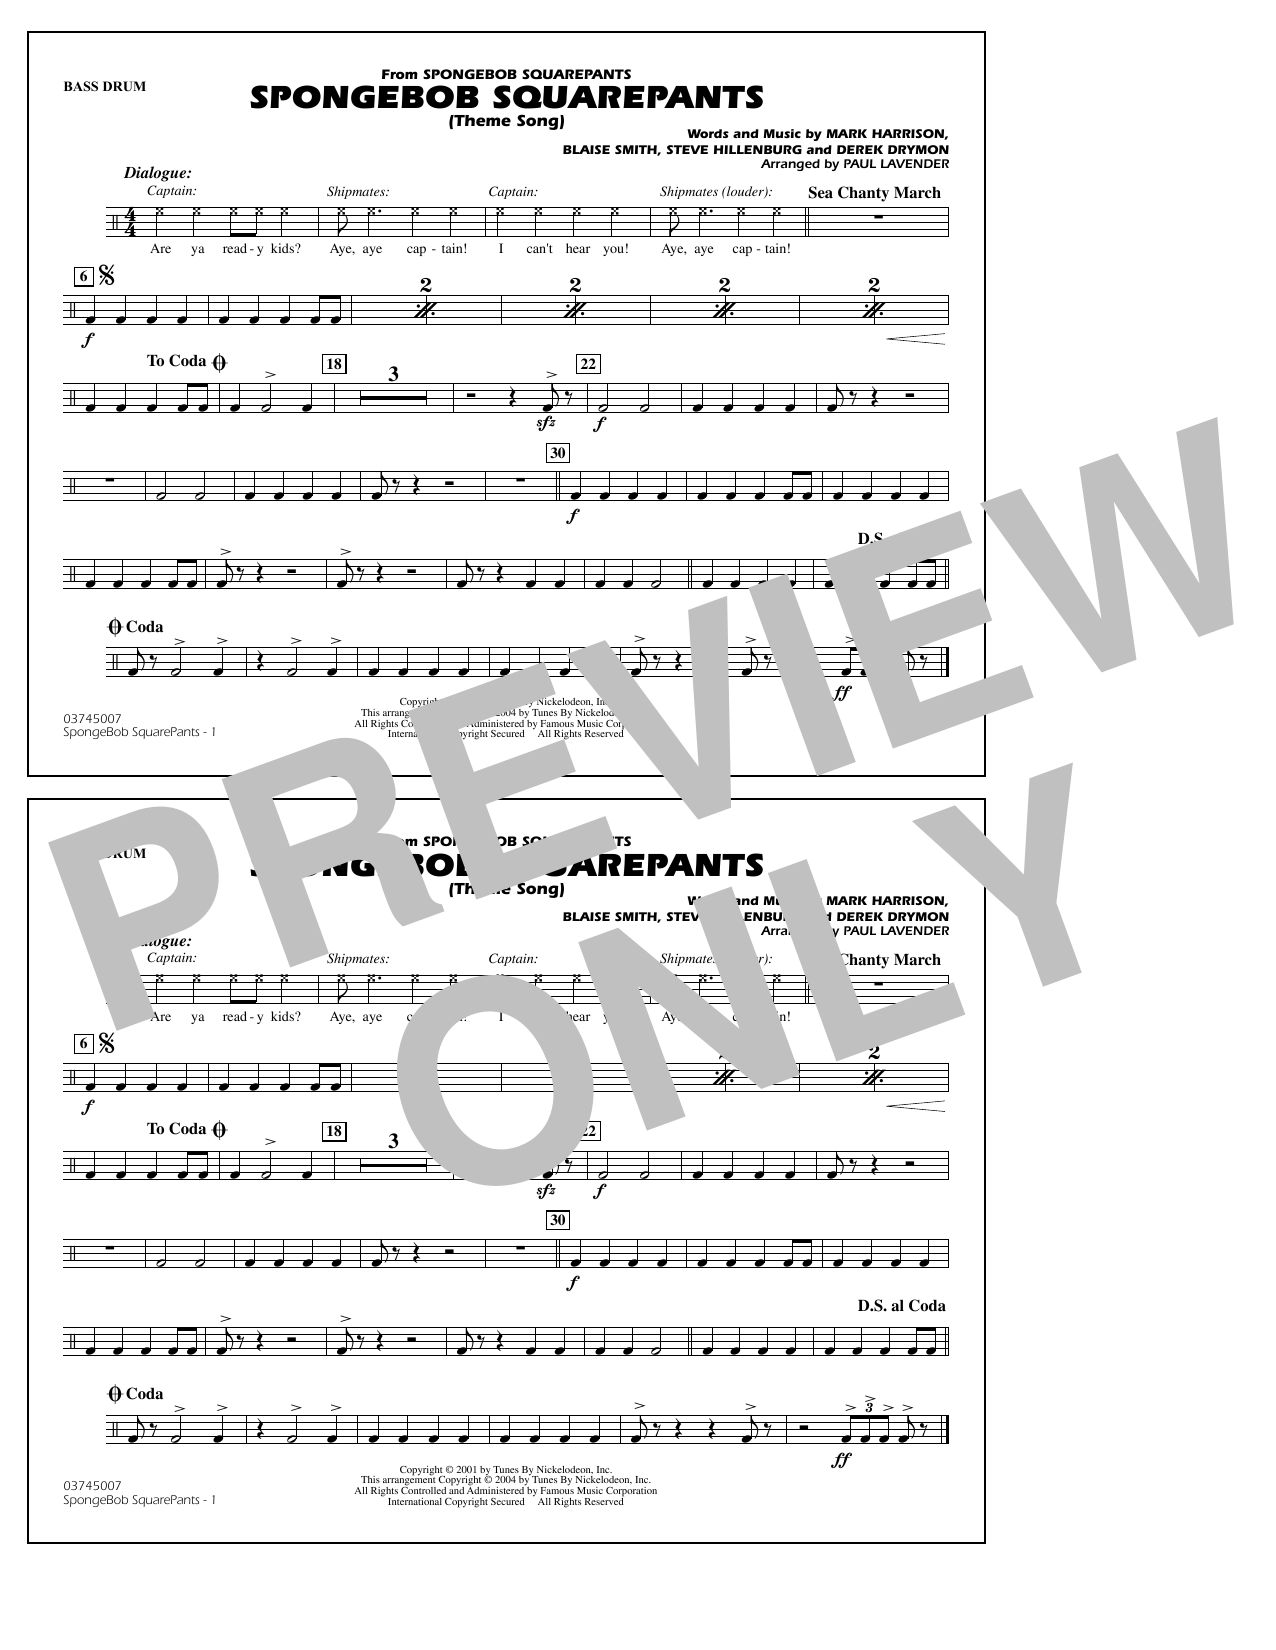 Steve Hillenburg Spongebob Squarepants (Theme Song) (arr. Paul Lavender) - Bass Drum Sheet Music Notes & Chords for Marching Band - Download or Print PDF